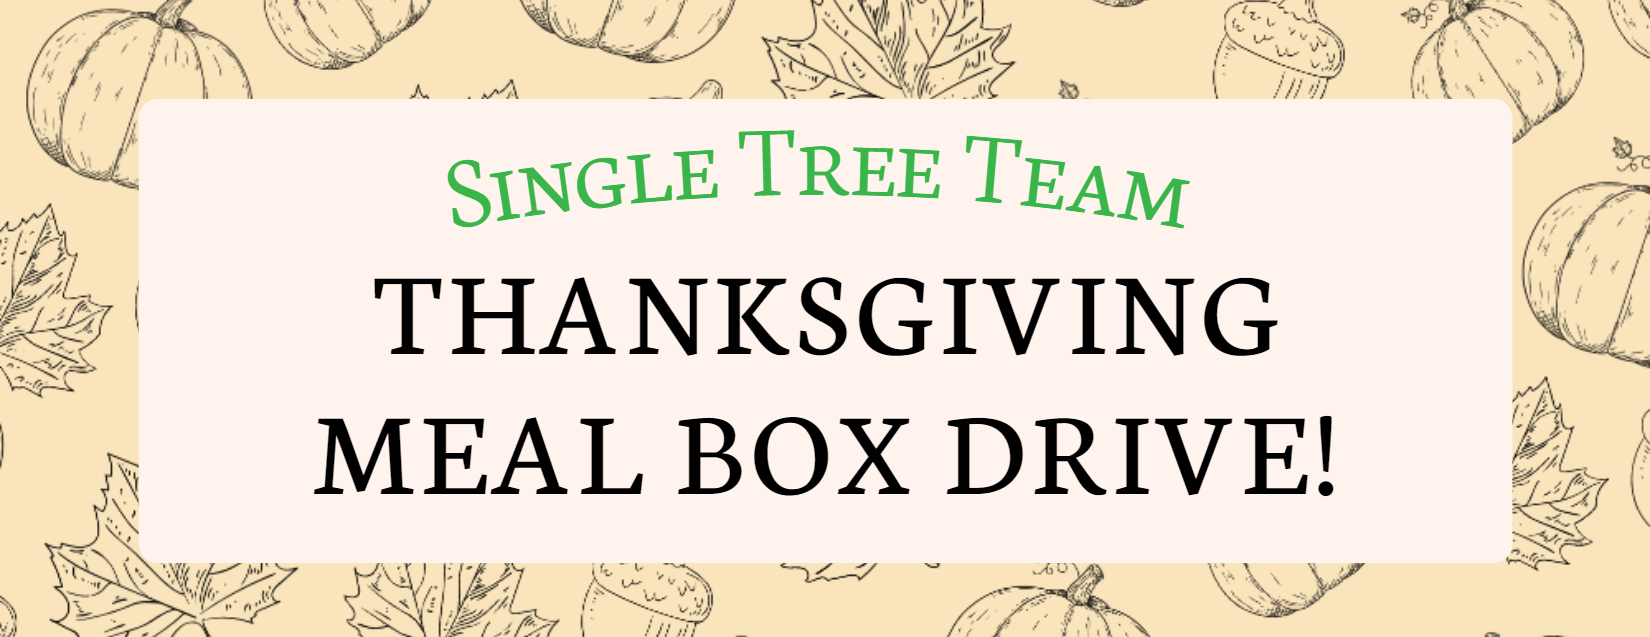 Single Tree Team Thanksgiving Meal Box Drive